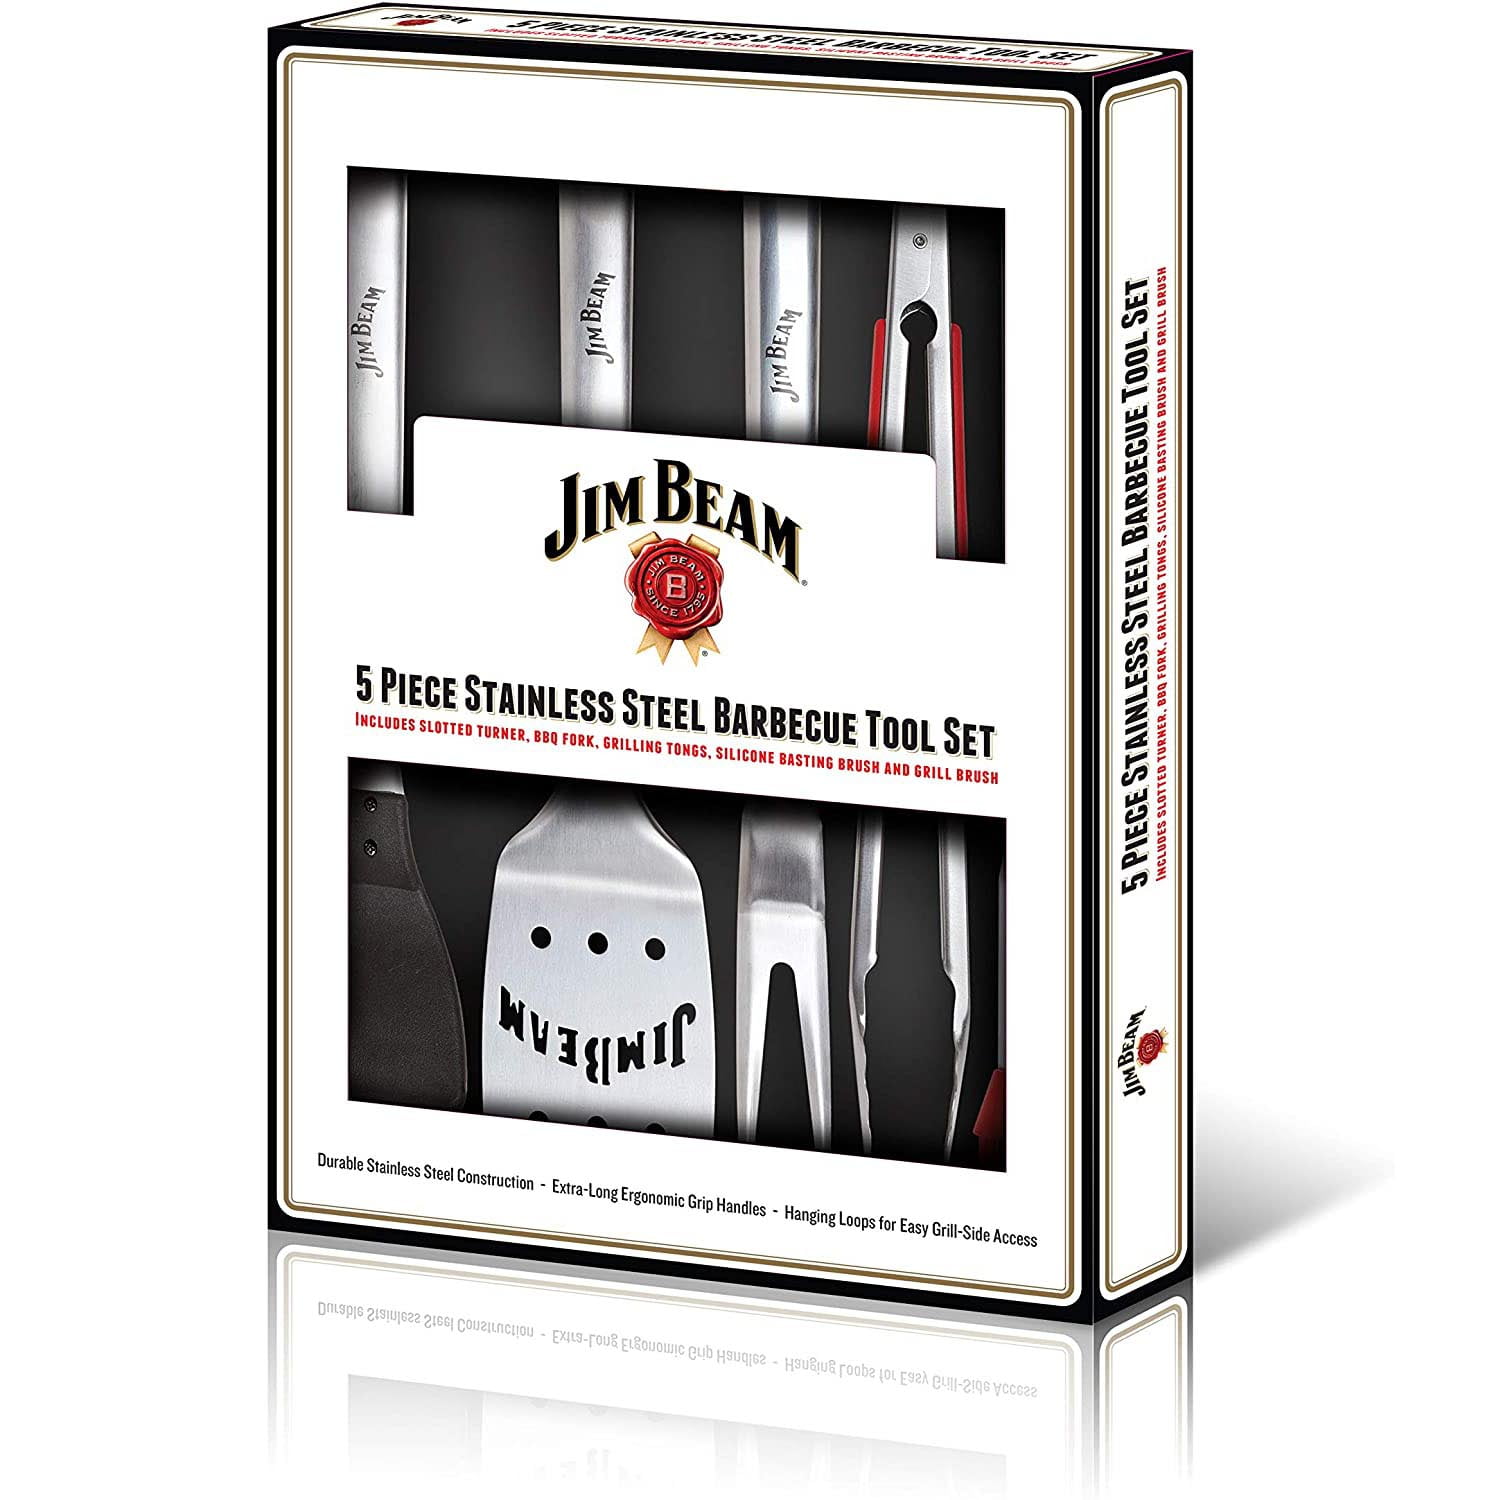  Jim Beam Grilling Essentials Tongs, Basting Brush, Shaker  Grilling Gift Set : Home & Kitchen